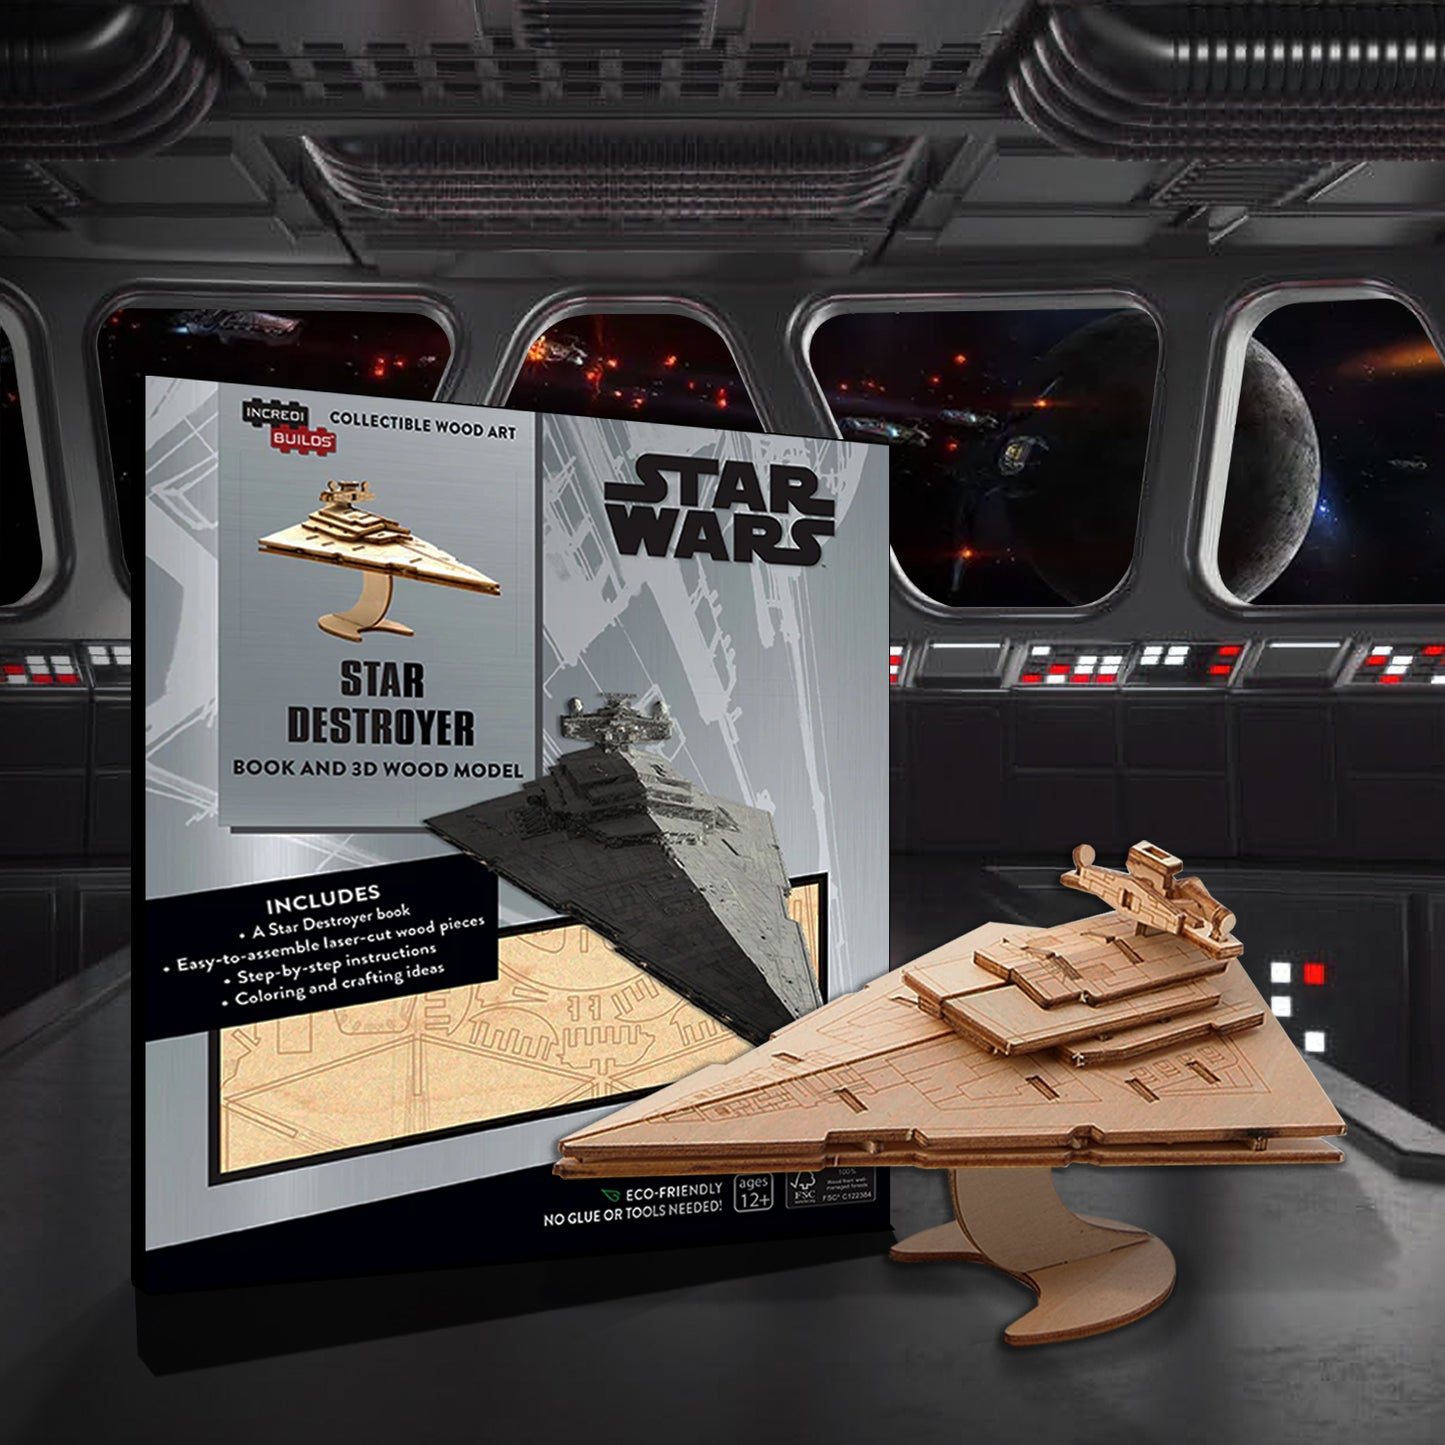 Star wars star destroyer book and d wood model â stands